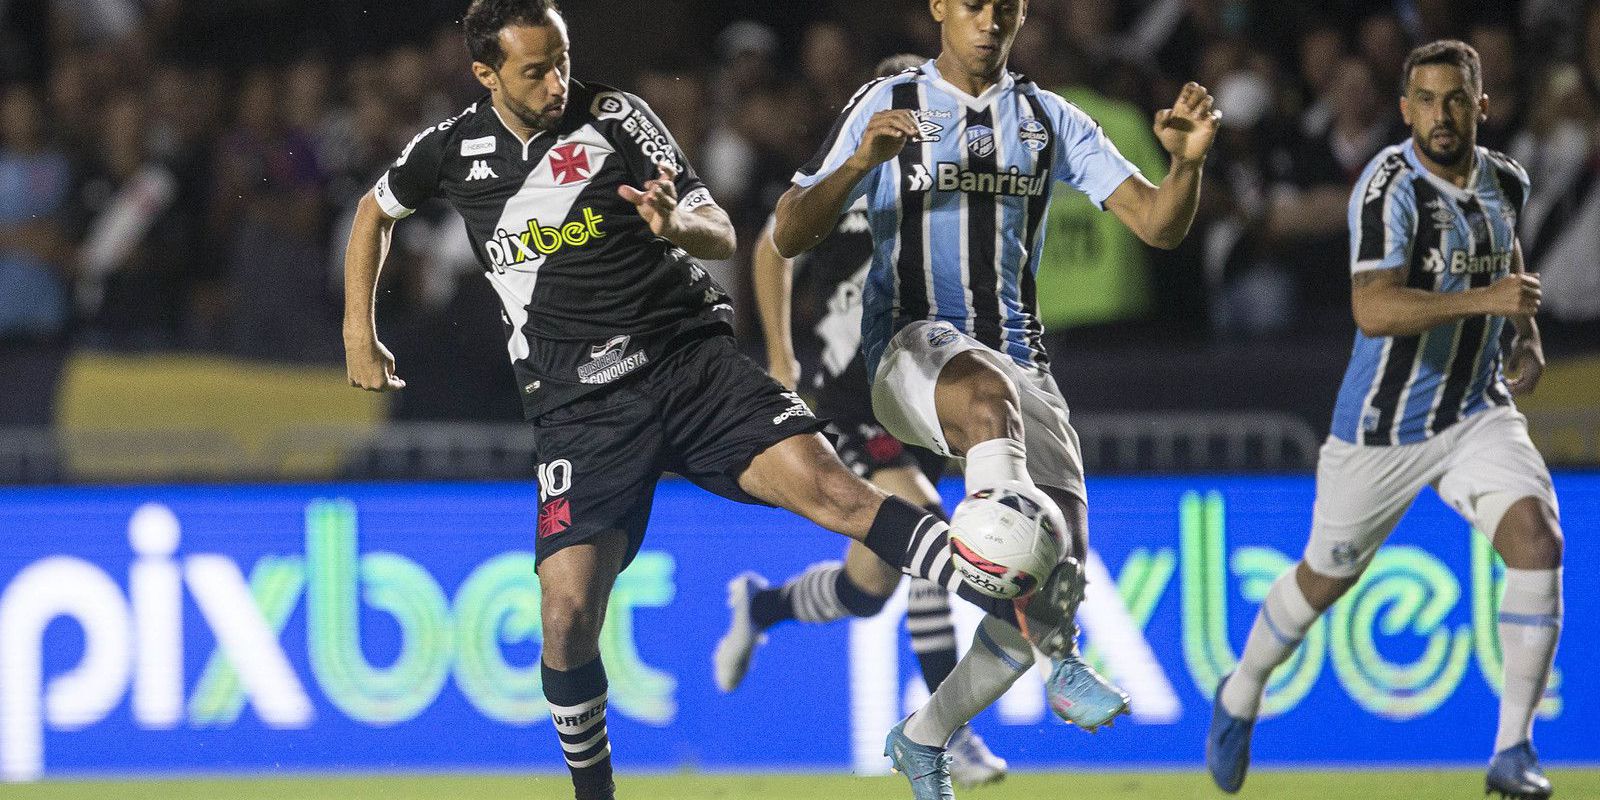 Vasco stops at the crossbar and draws with Grêmio in São Januário